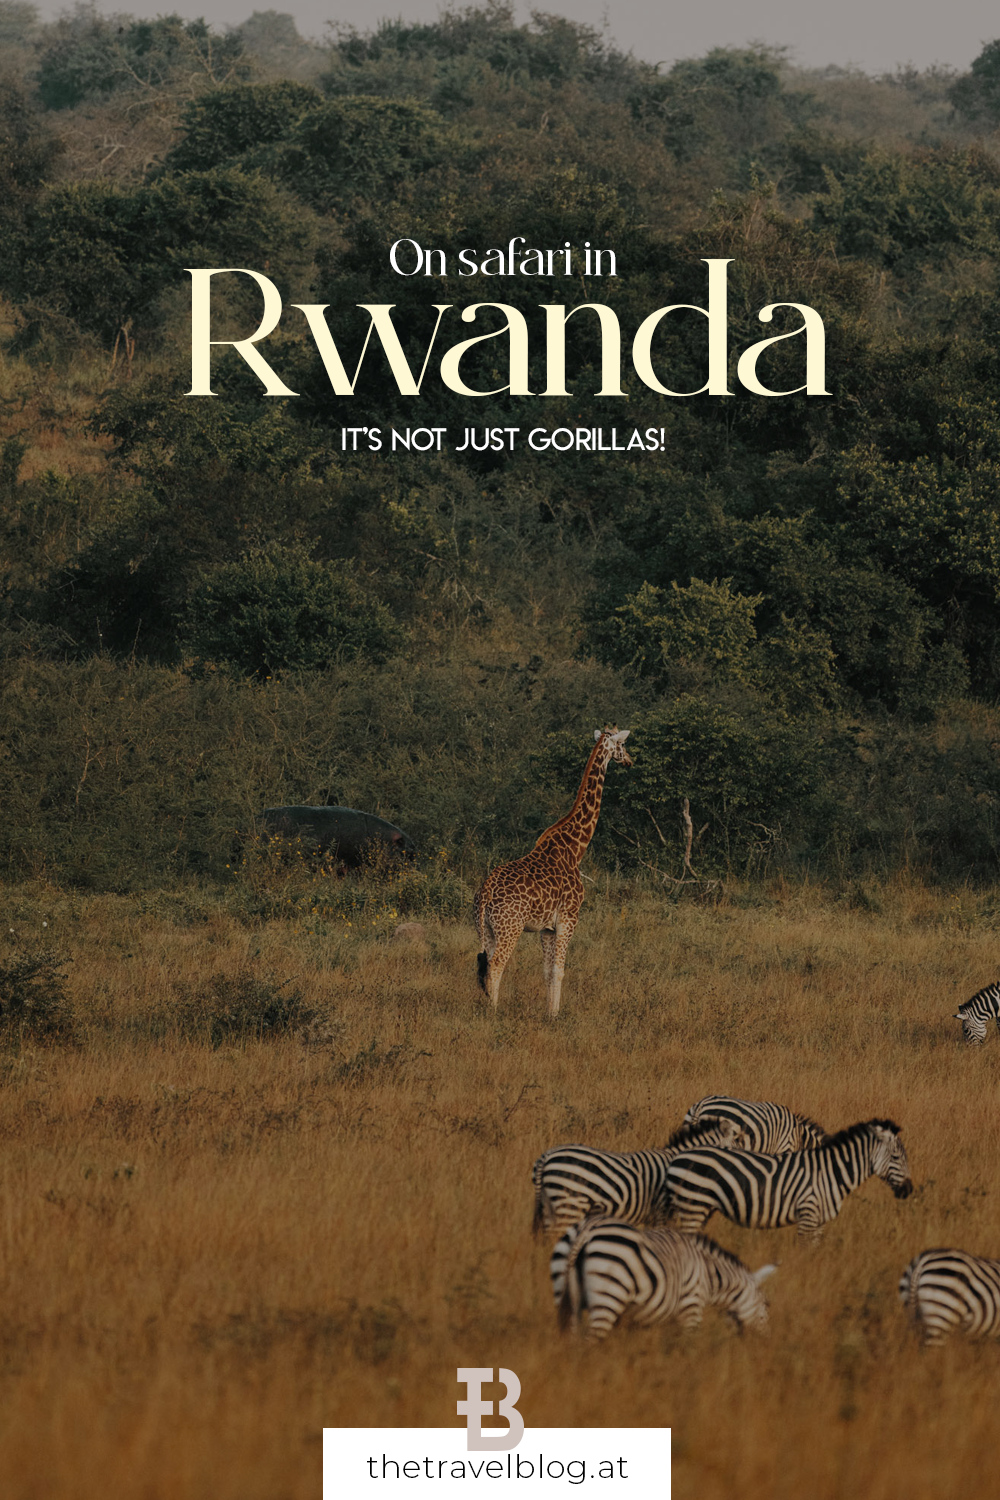 On safari in Akagera National Park in Rwanda